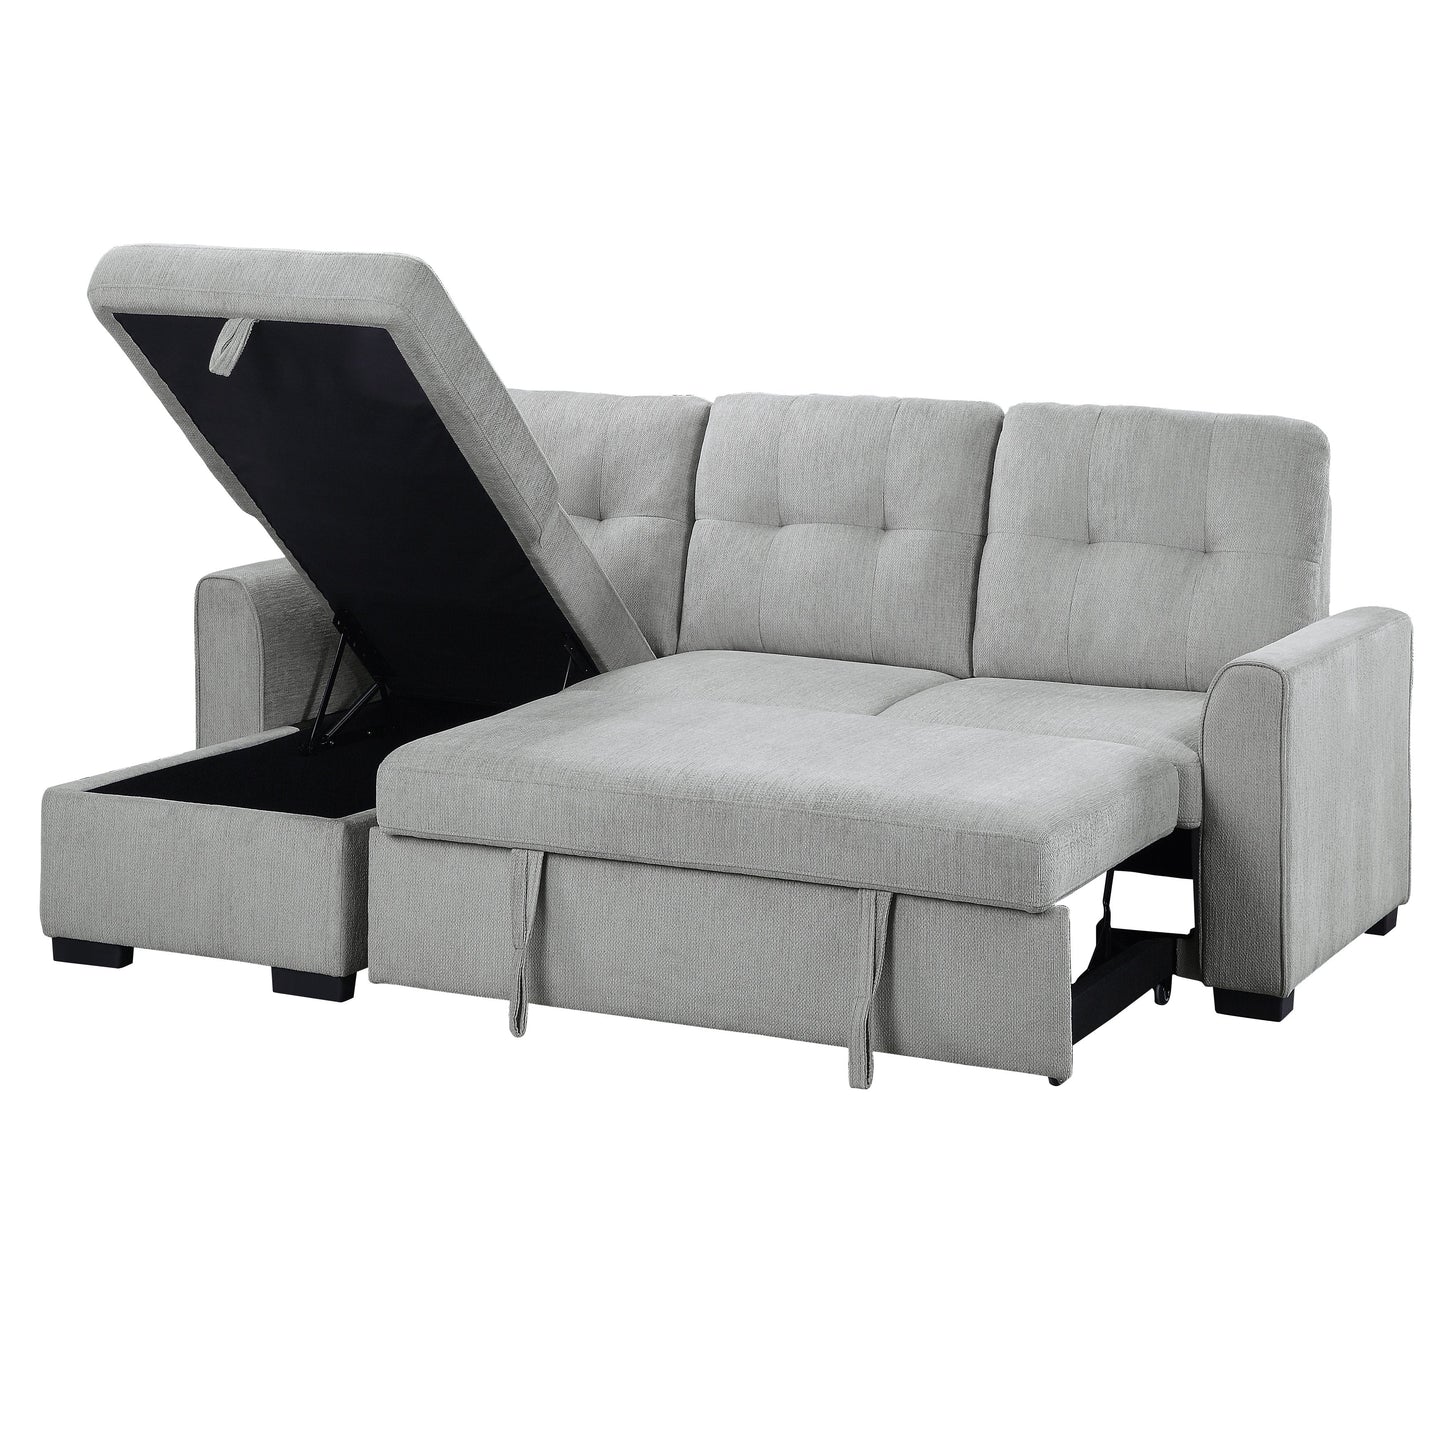 Carolina Gray Reversible Storage Sleeper Sofa Chaise